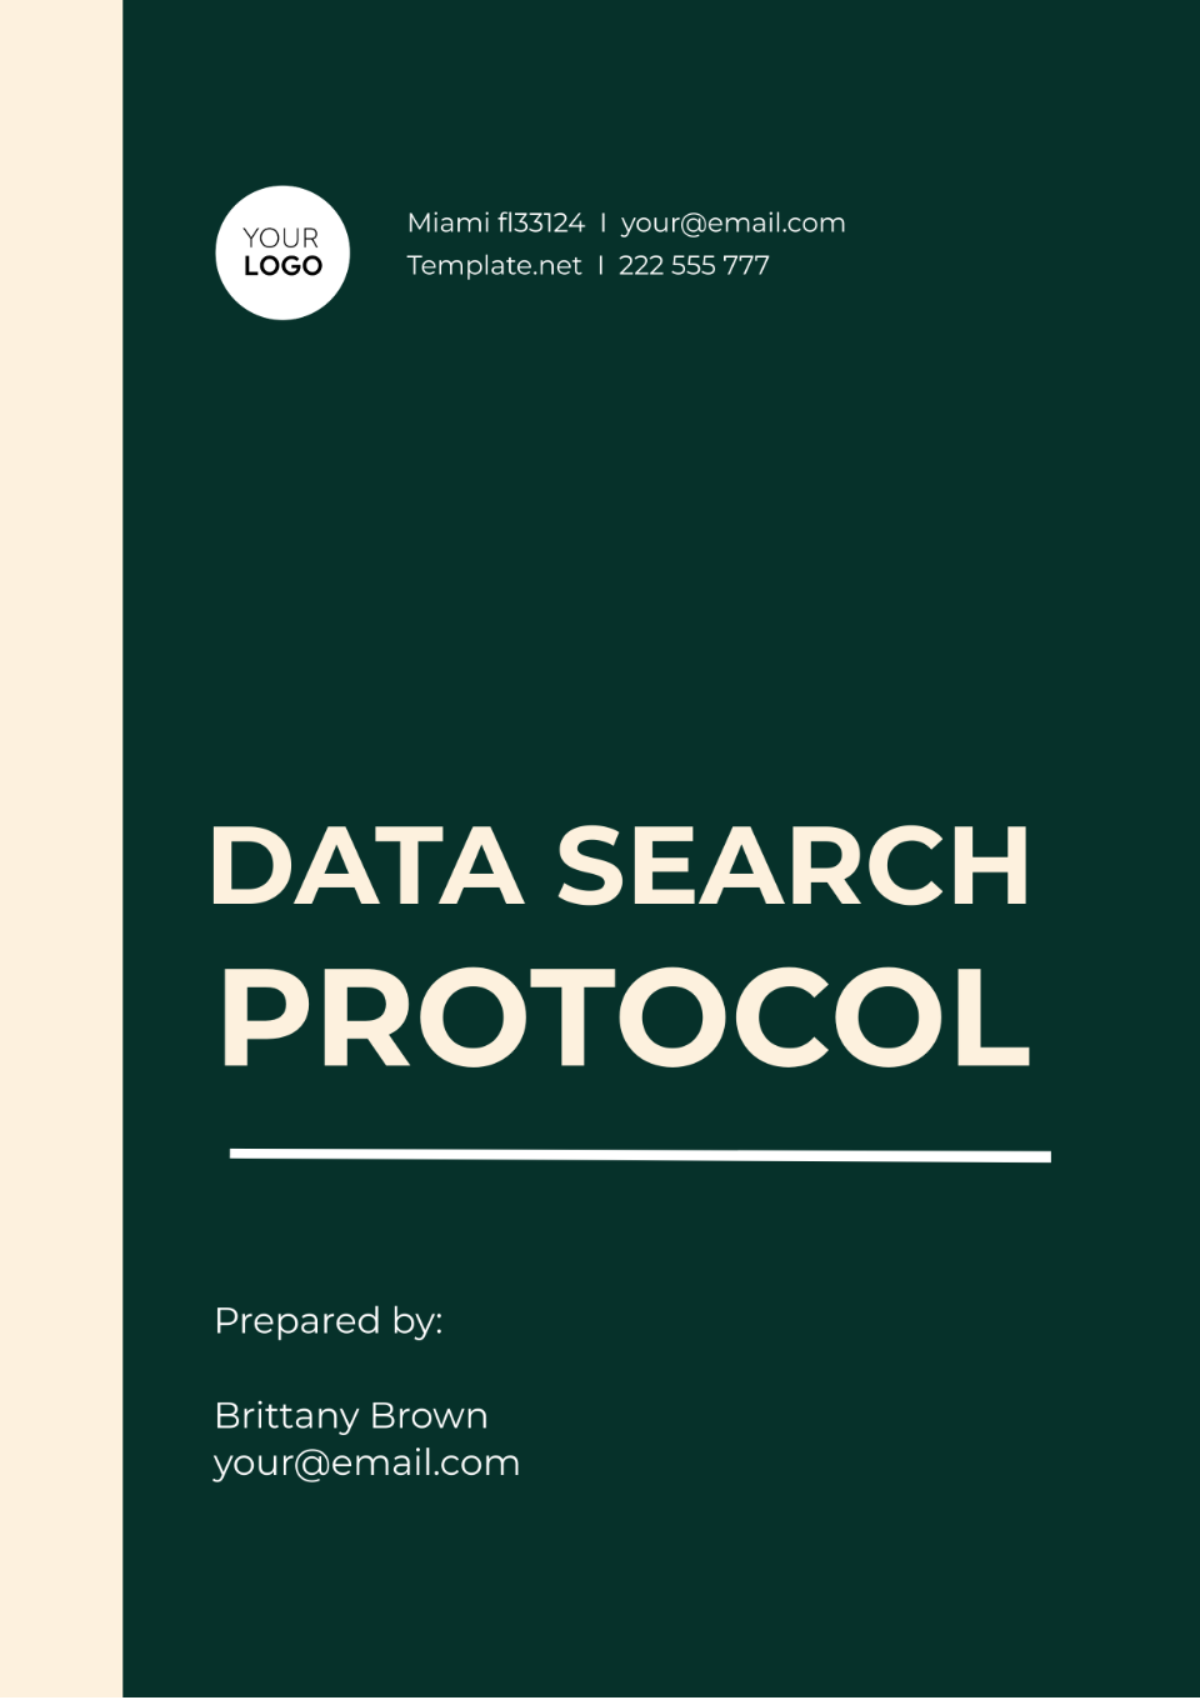 Free Data Search Protocol Template